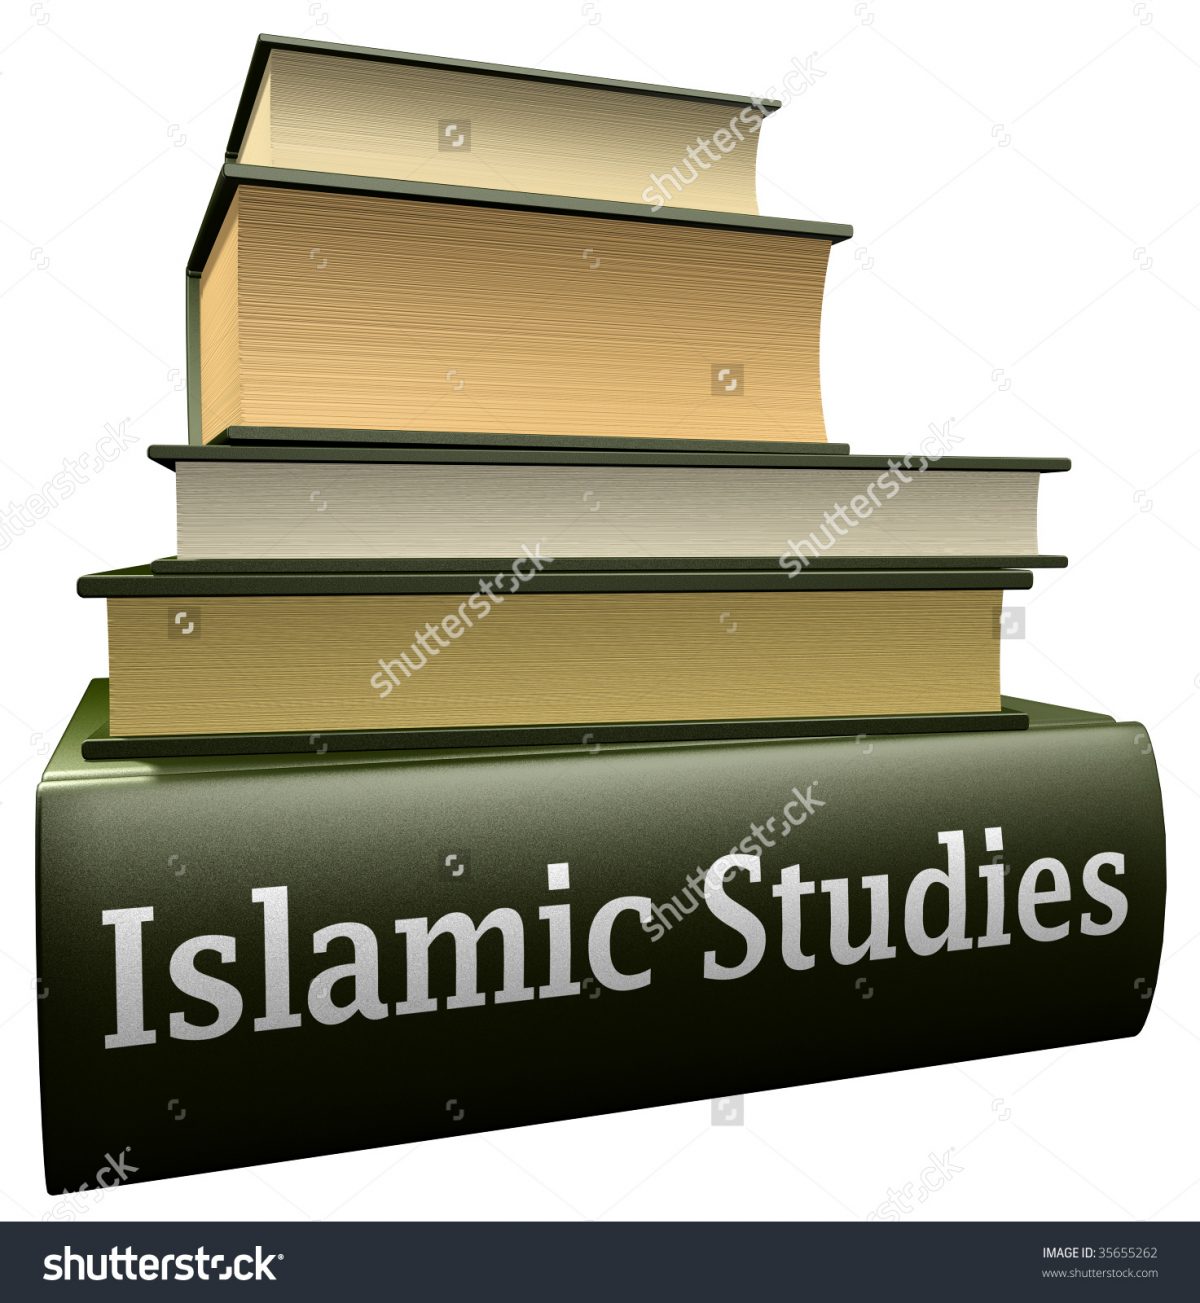 University of Lagos undergraduate specific admission requirements for Islamic Studies 2020